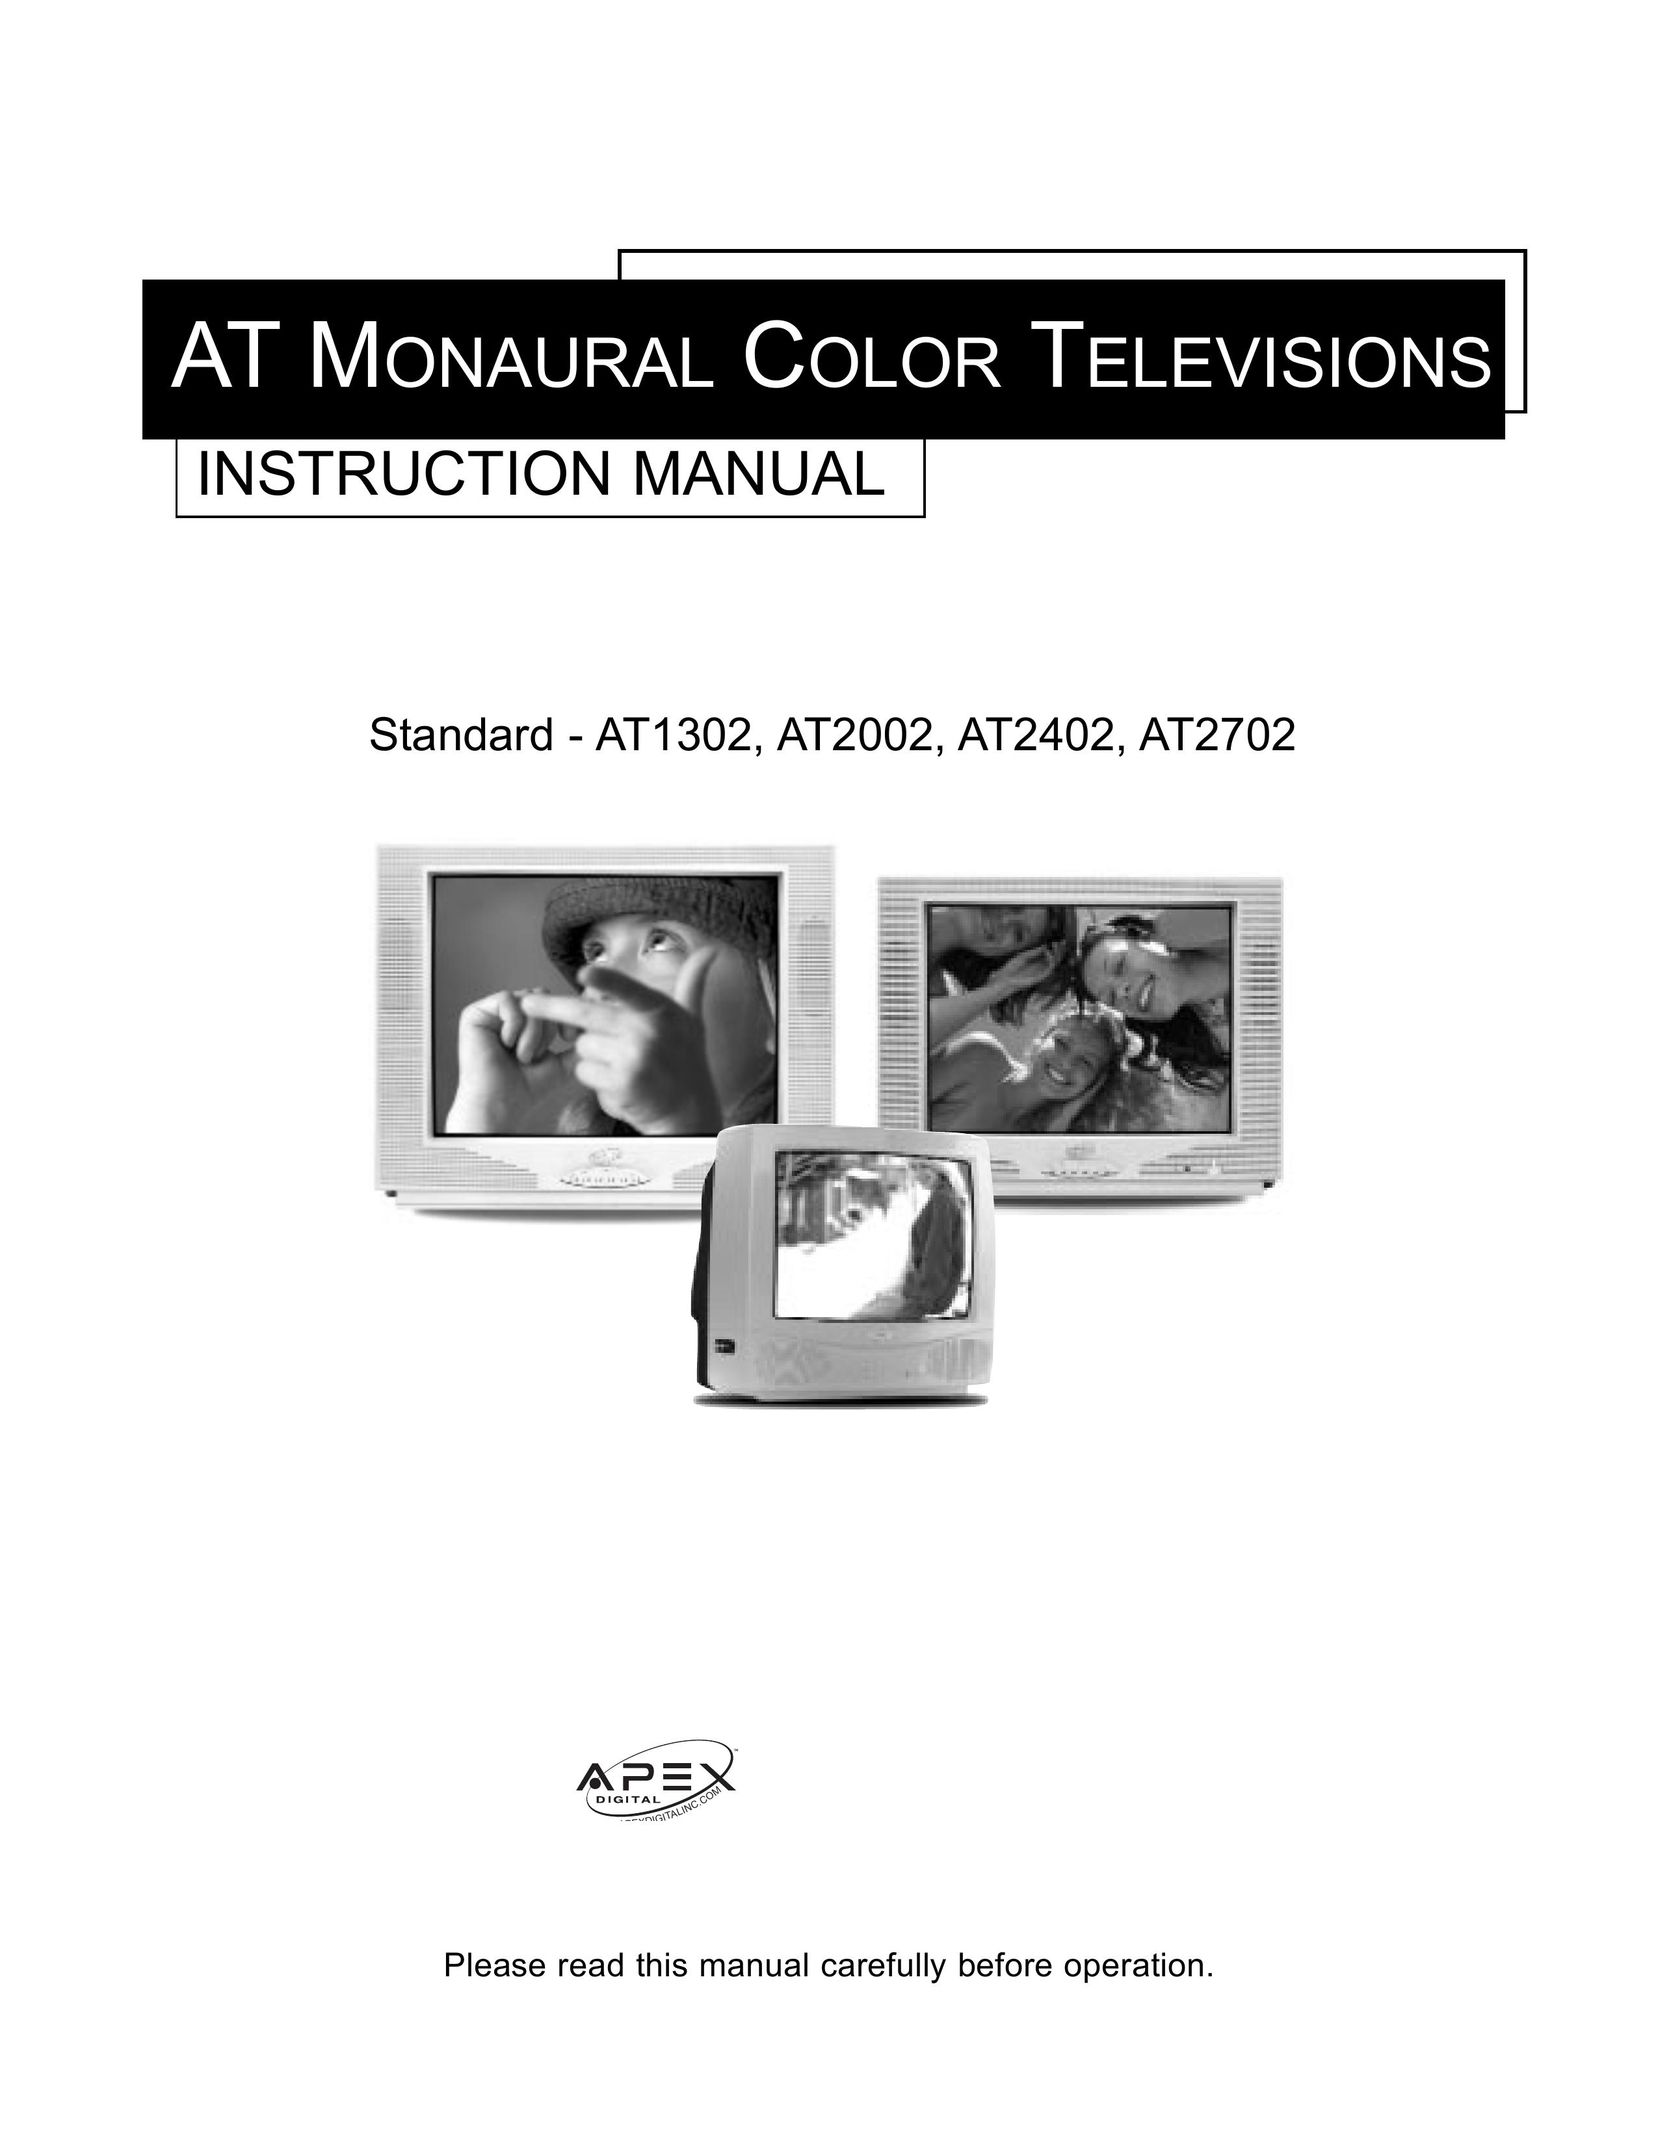 Apex Digital AT2002 Flat Panel Television User Manual